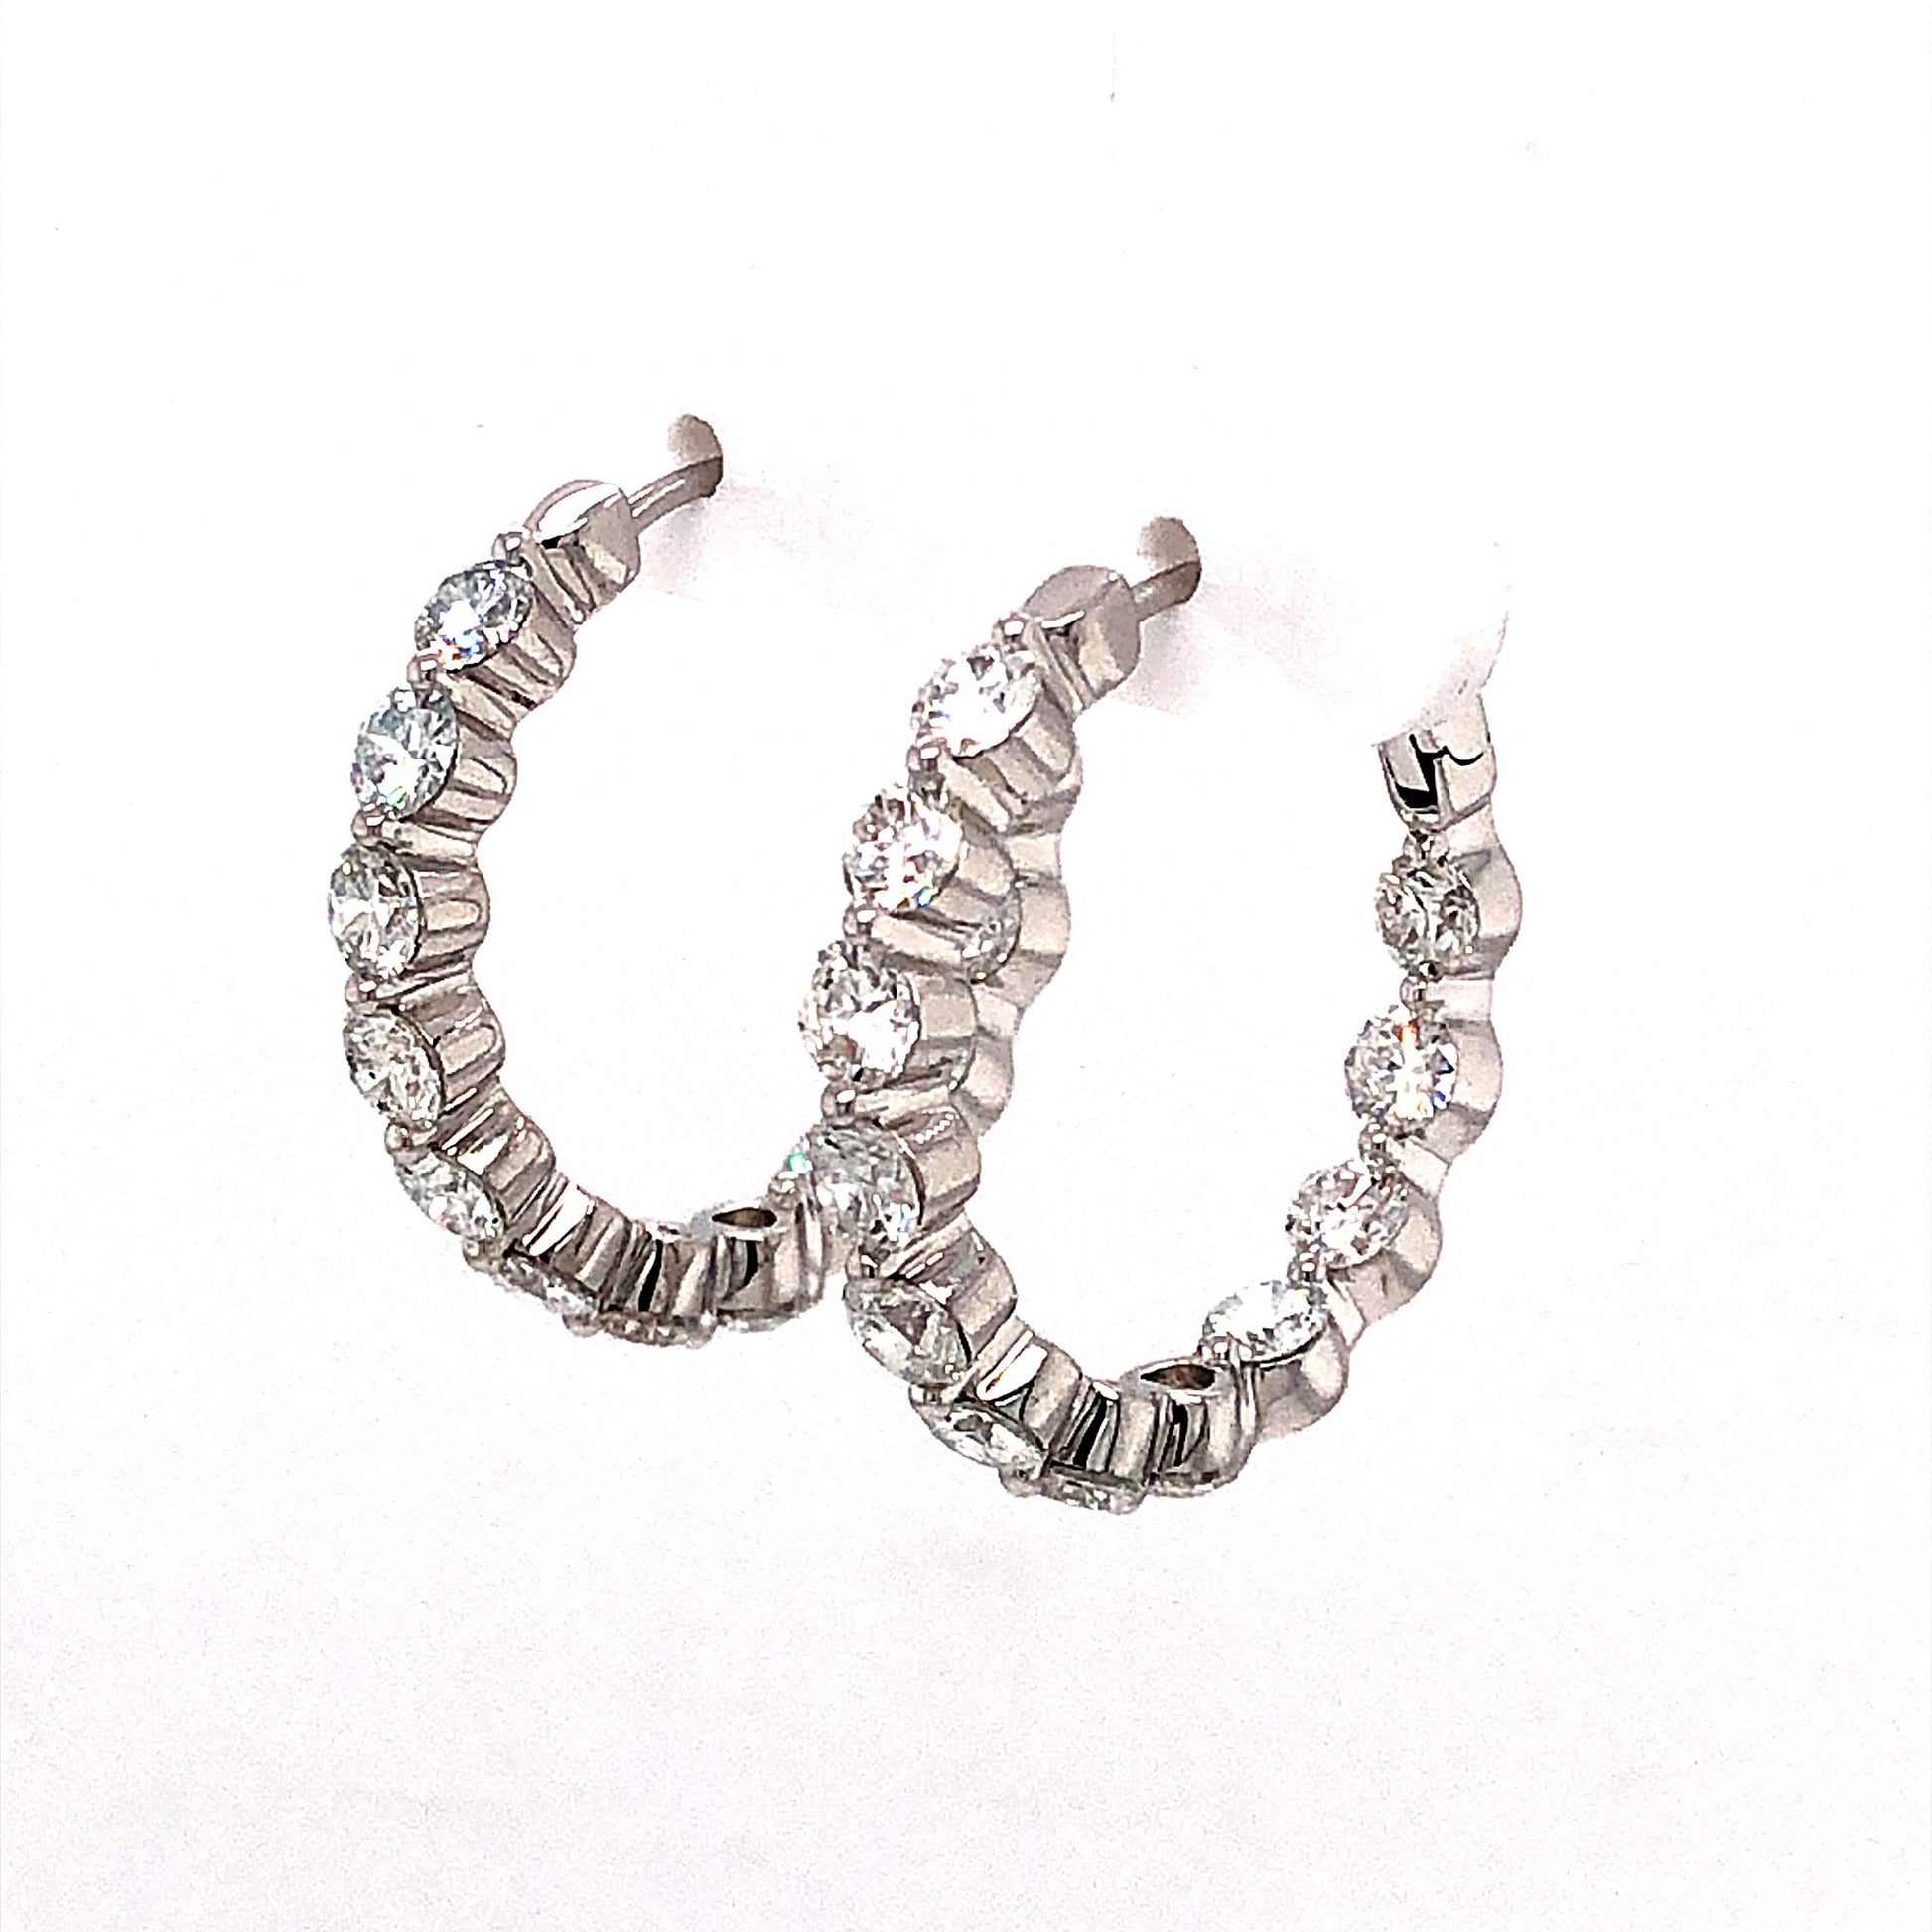 3.87 Carat Diamond Hoop Earrings in 18k White Gold